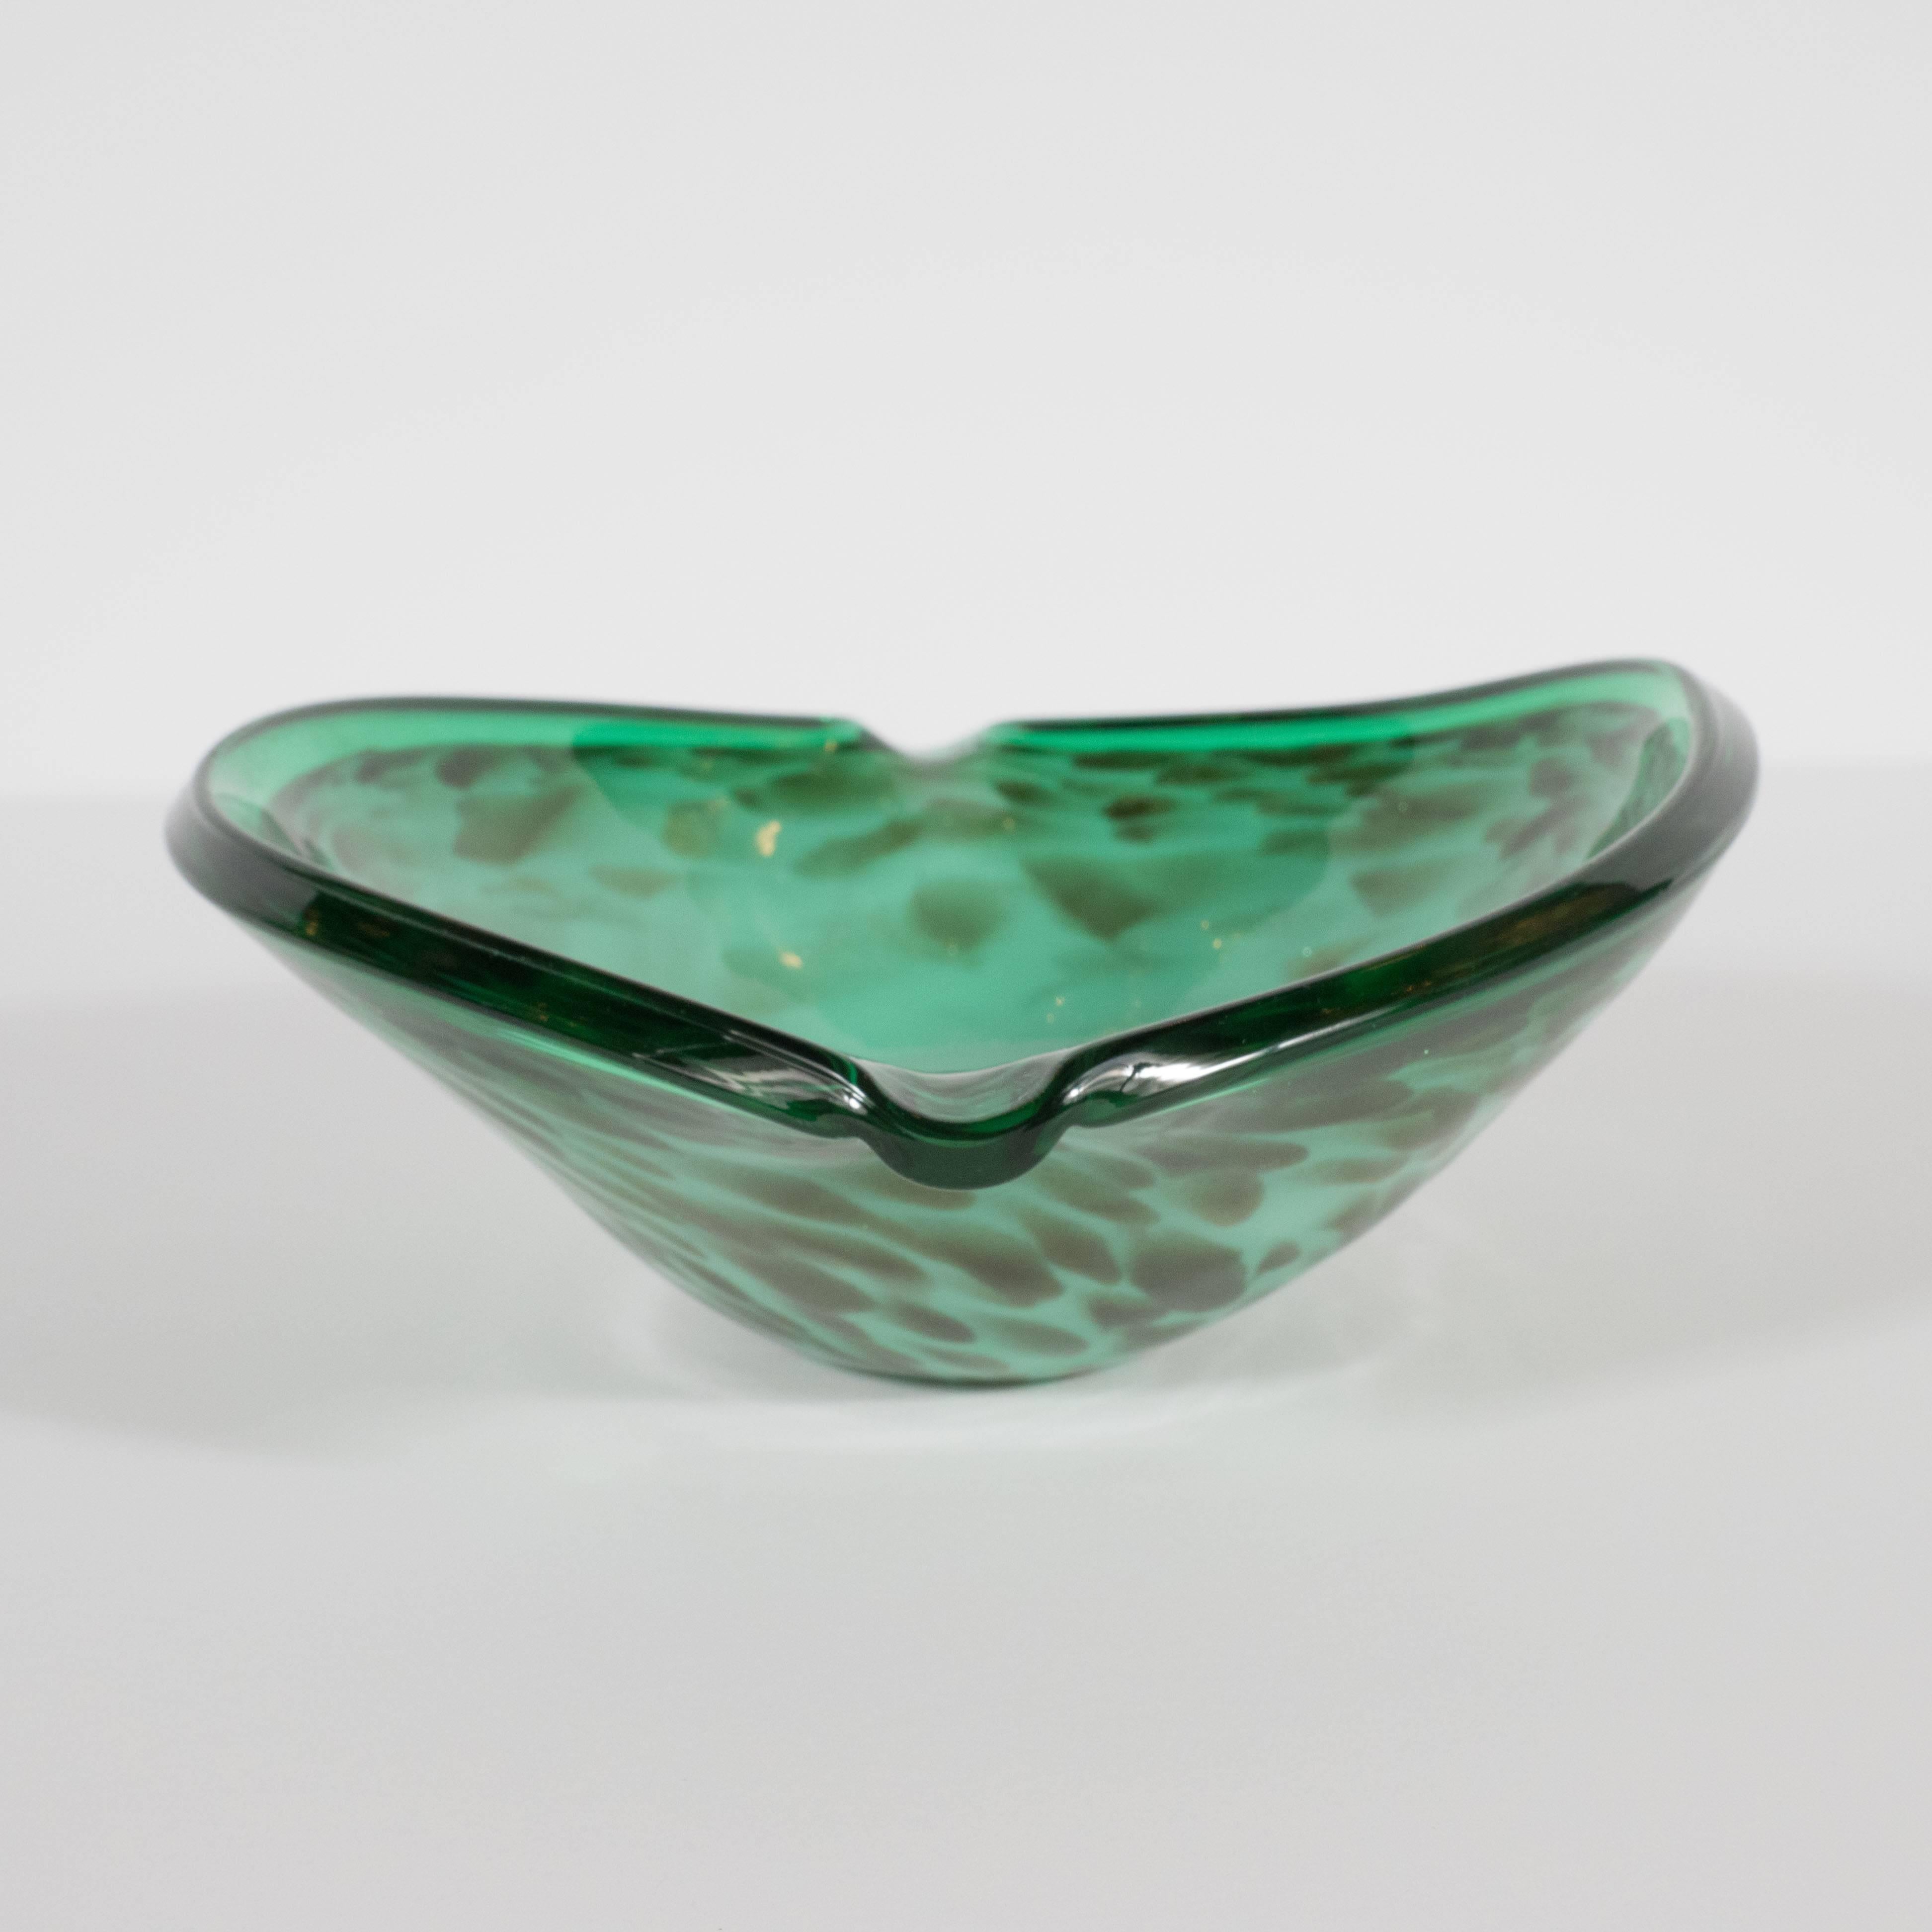 Gold Mid-Century Modern Murano Glass Bowl in Sea Foam and Iridescent Emerald Green